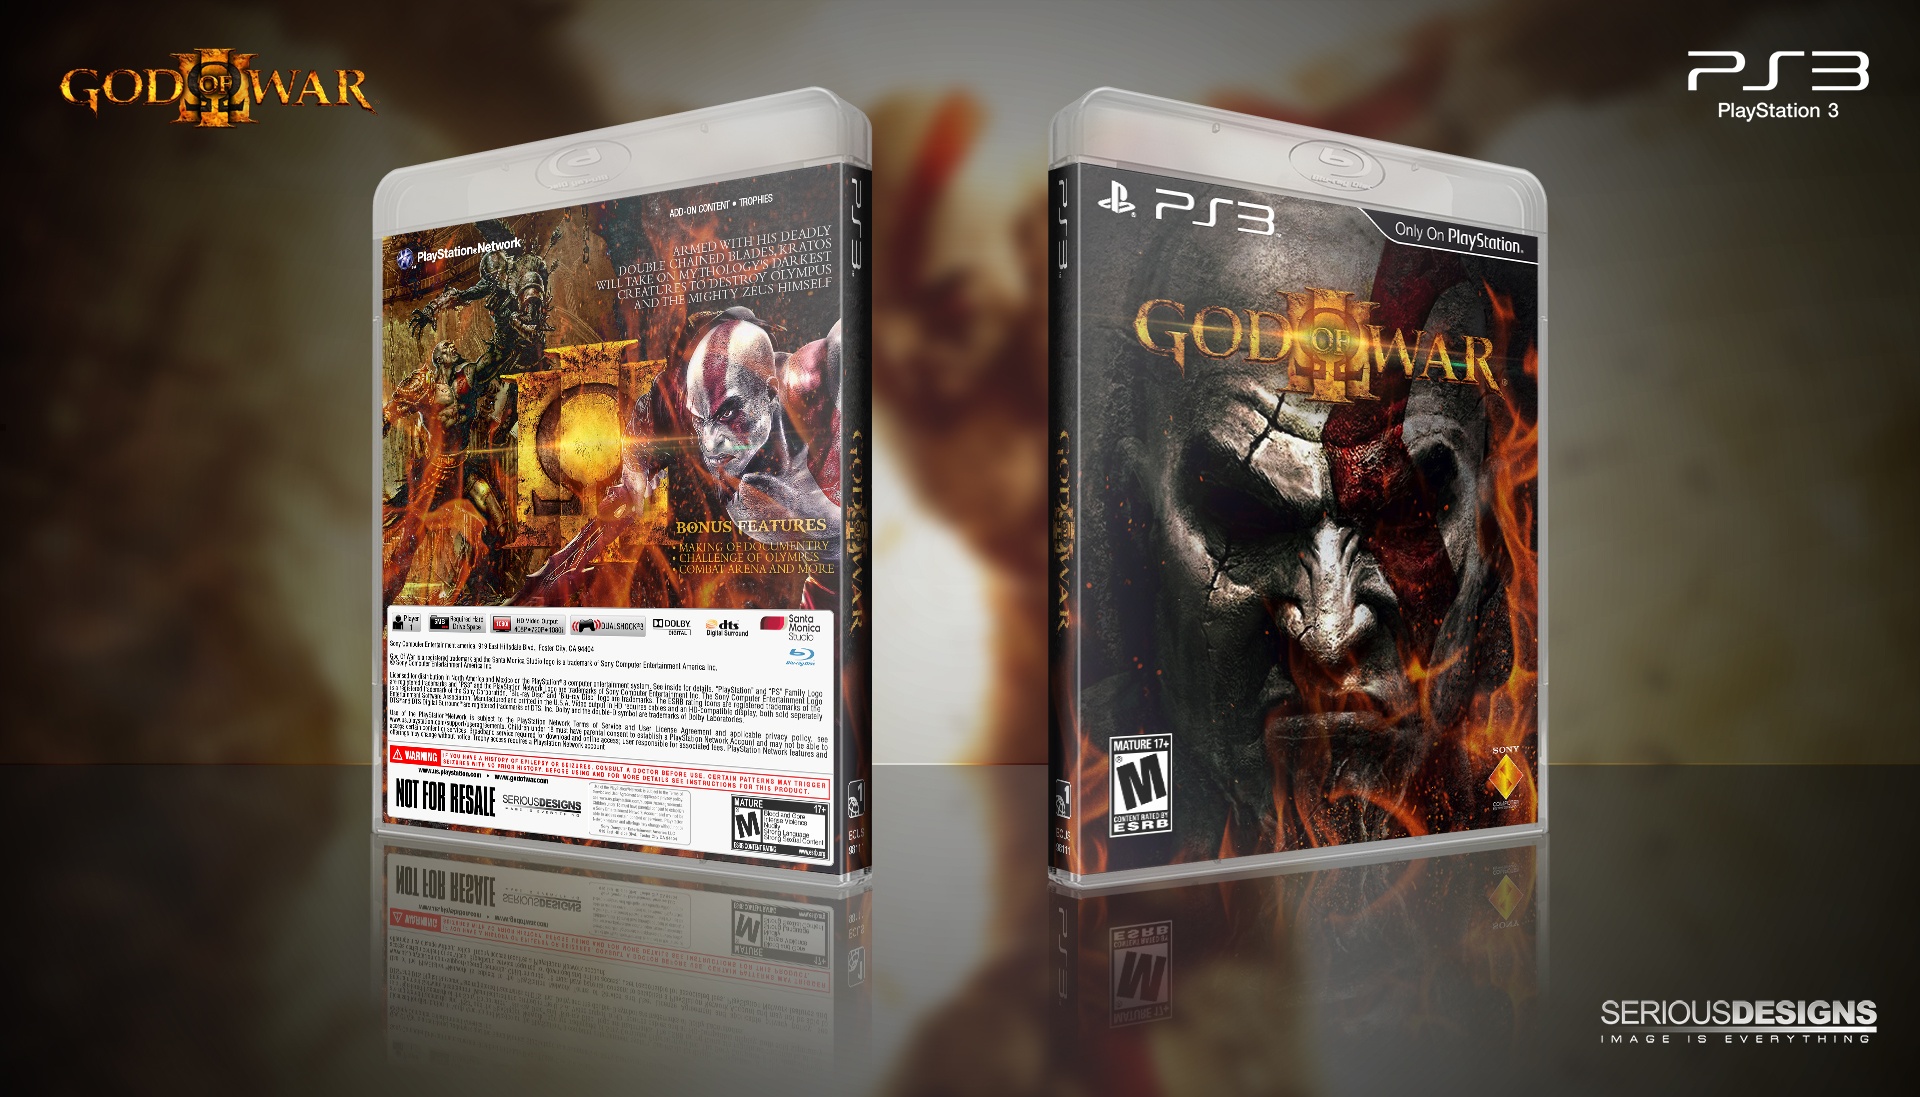 God Of War 3 box cover